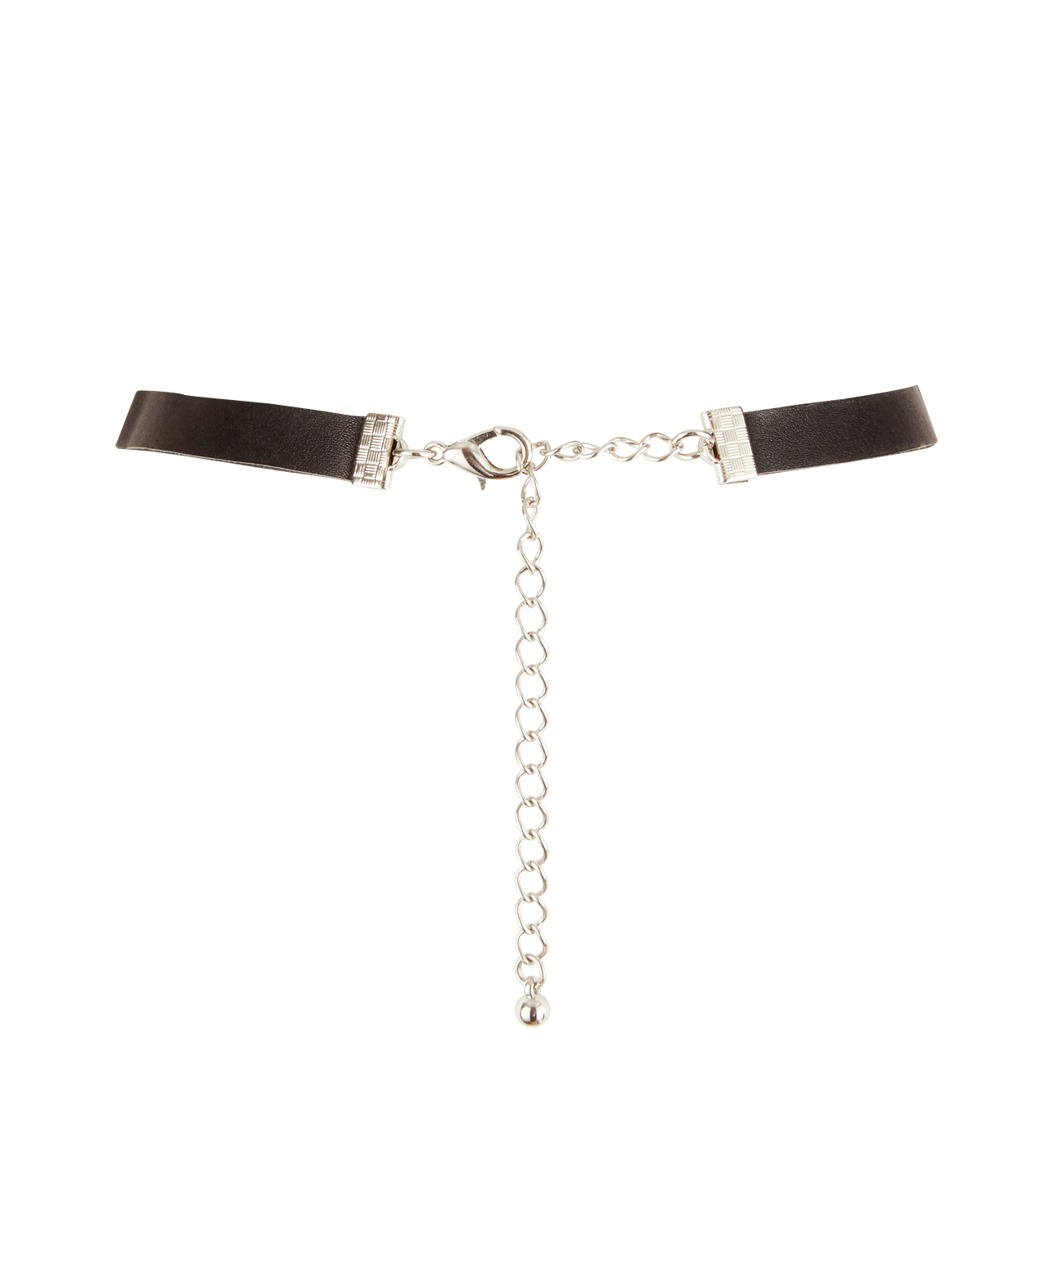 Cottelli Lingerie ожерелье с цепочками